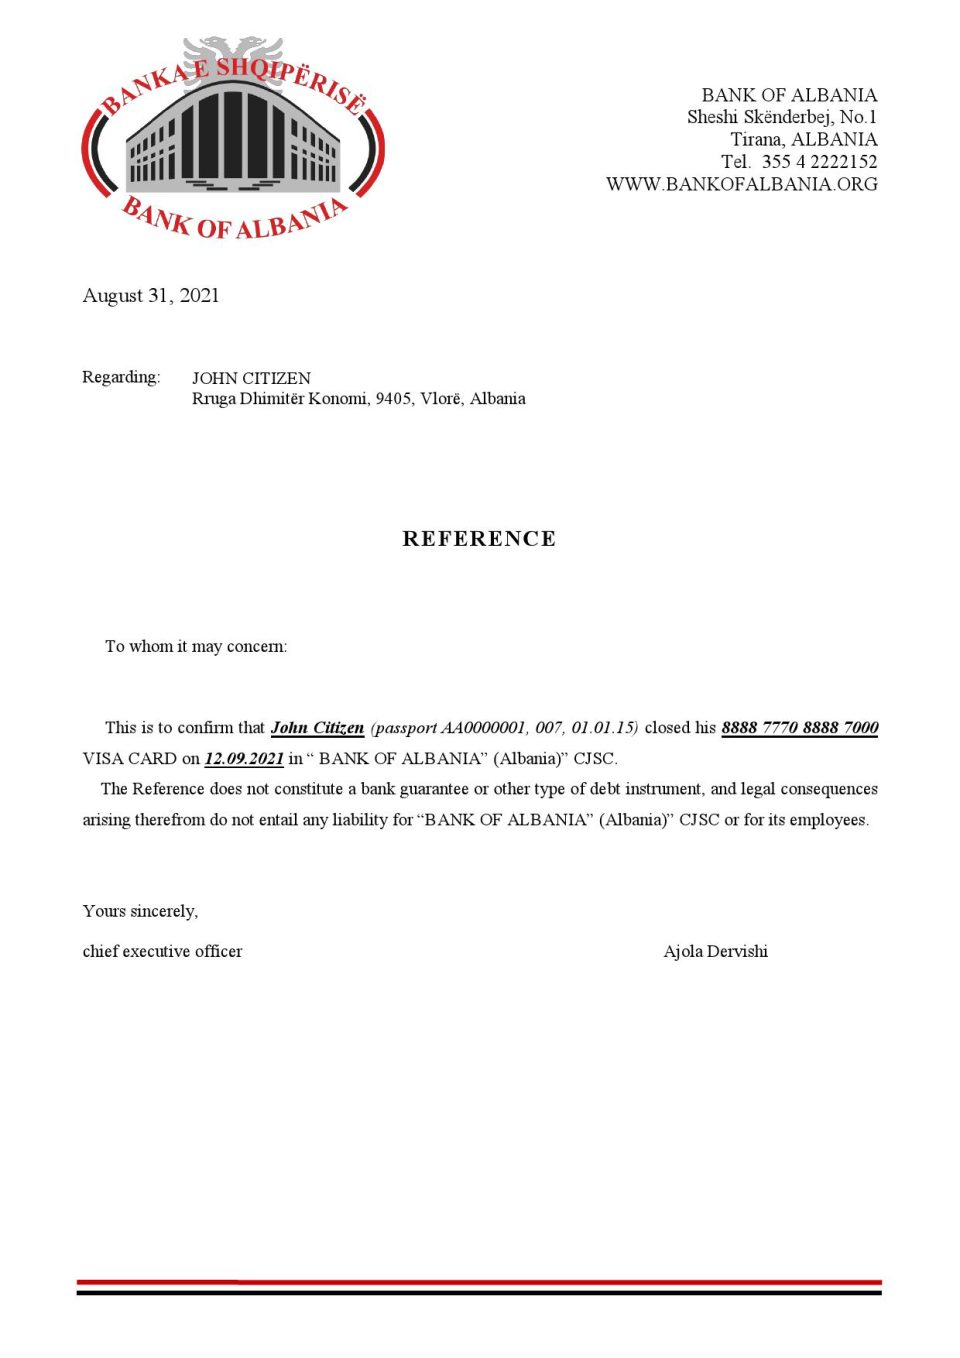 Download Albania Bank of Albania Bank Reference Letter Templates | Editable Word